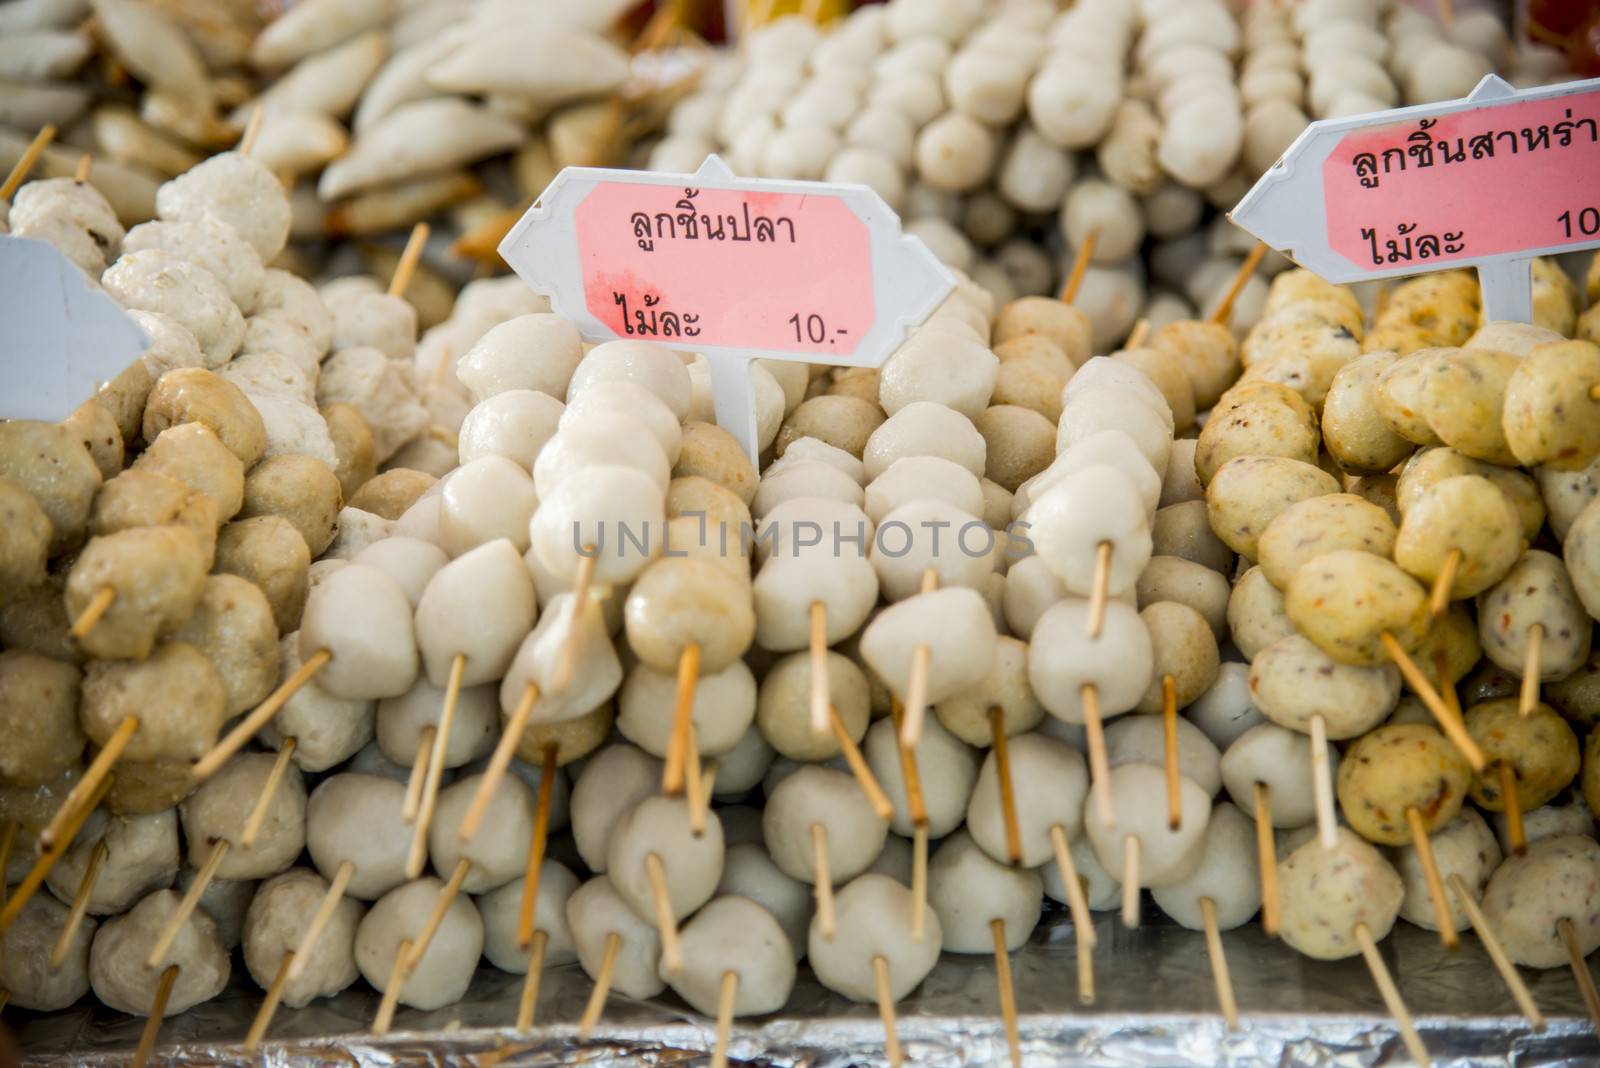 Fish meat ball in stick for sale 10 baht per stick by gjeerawut